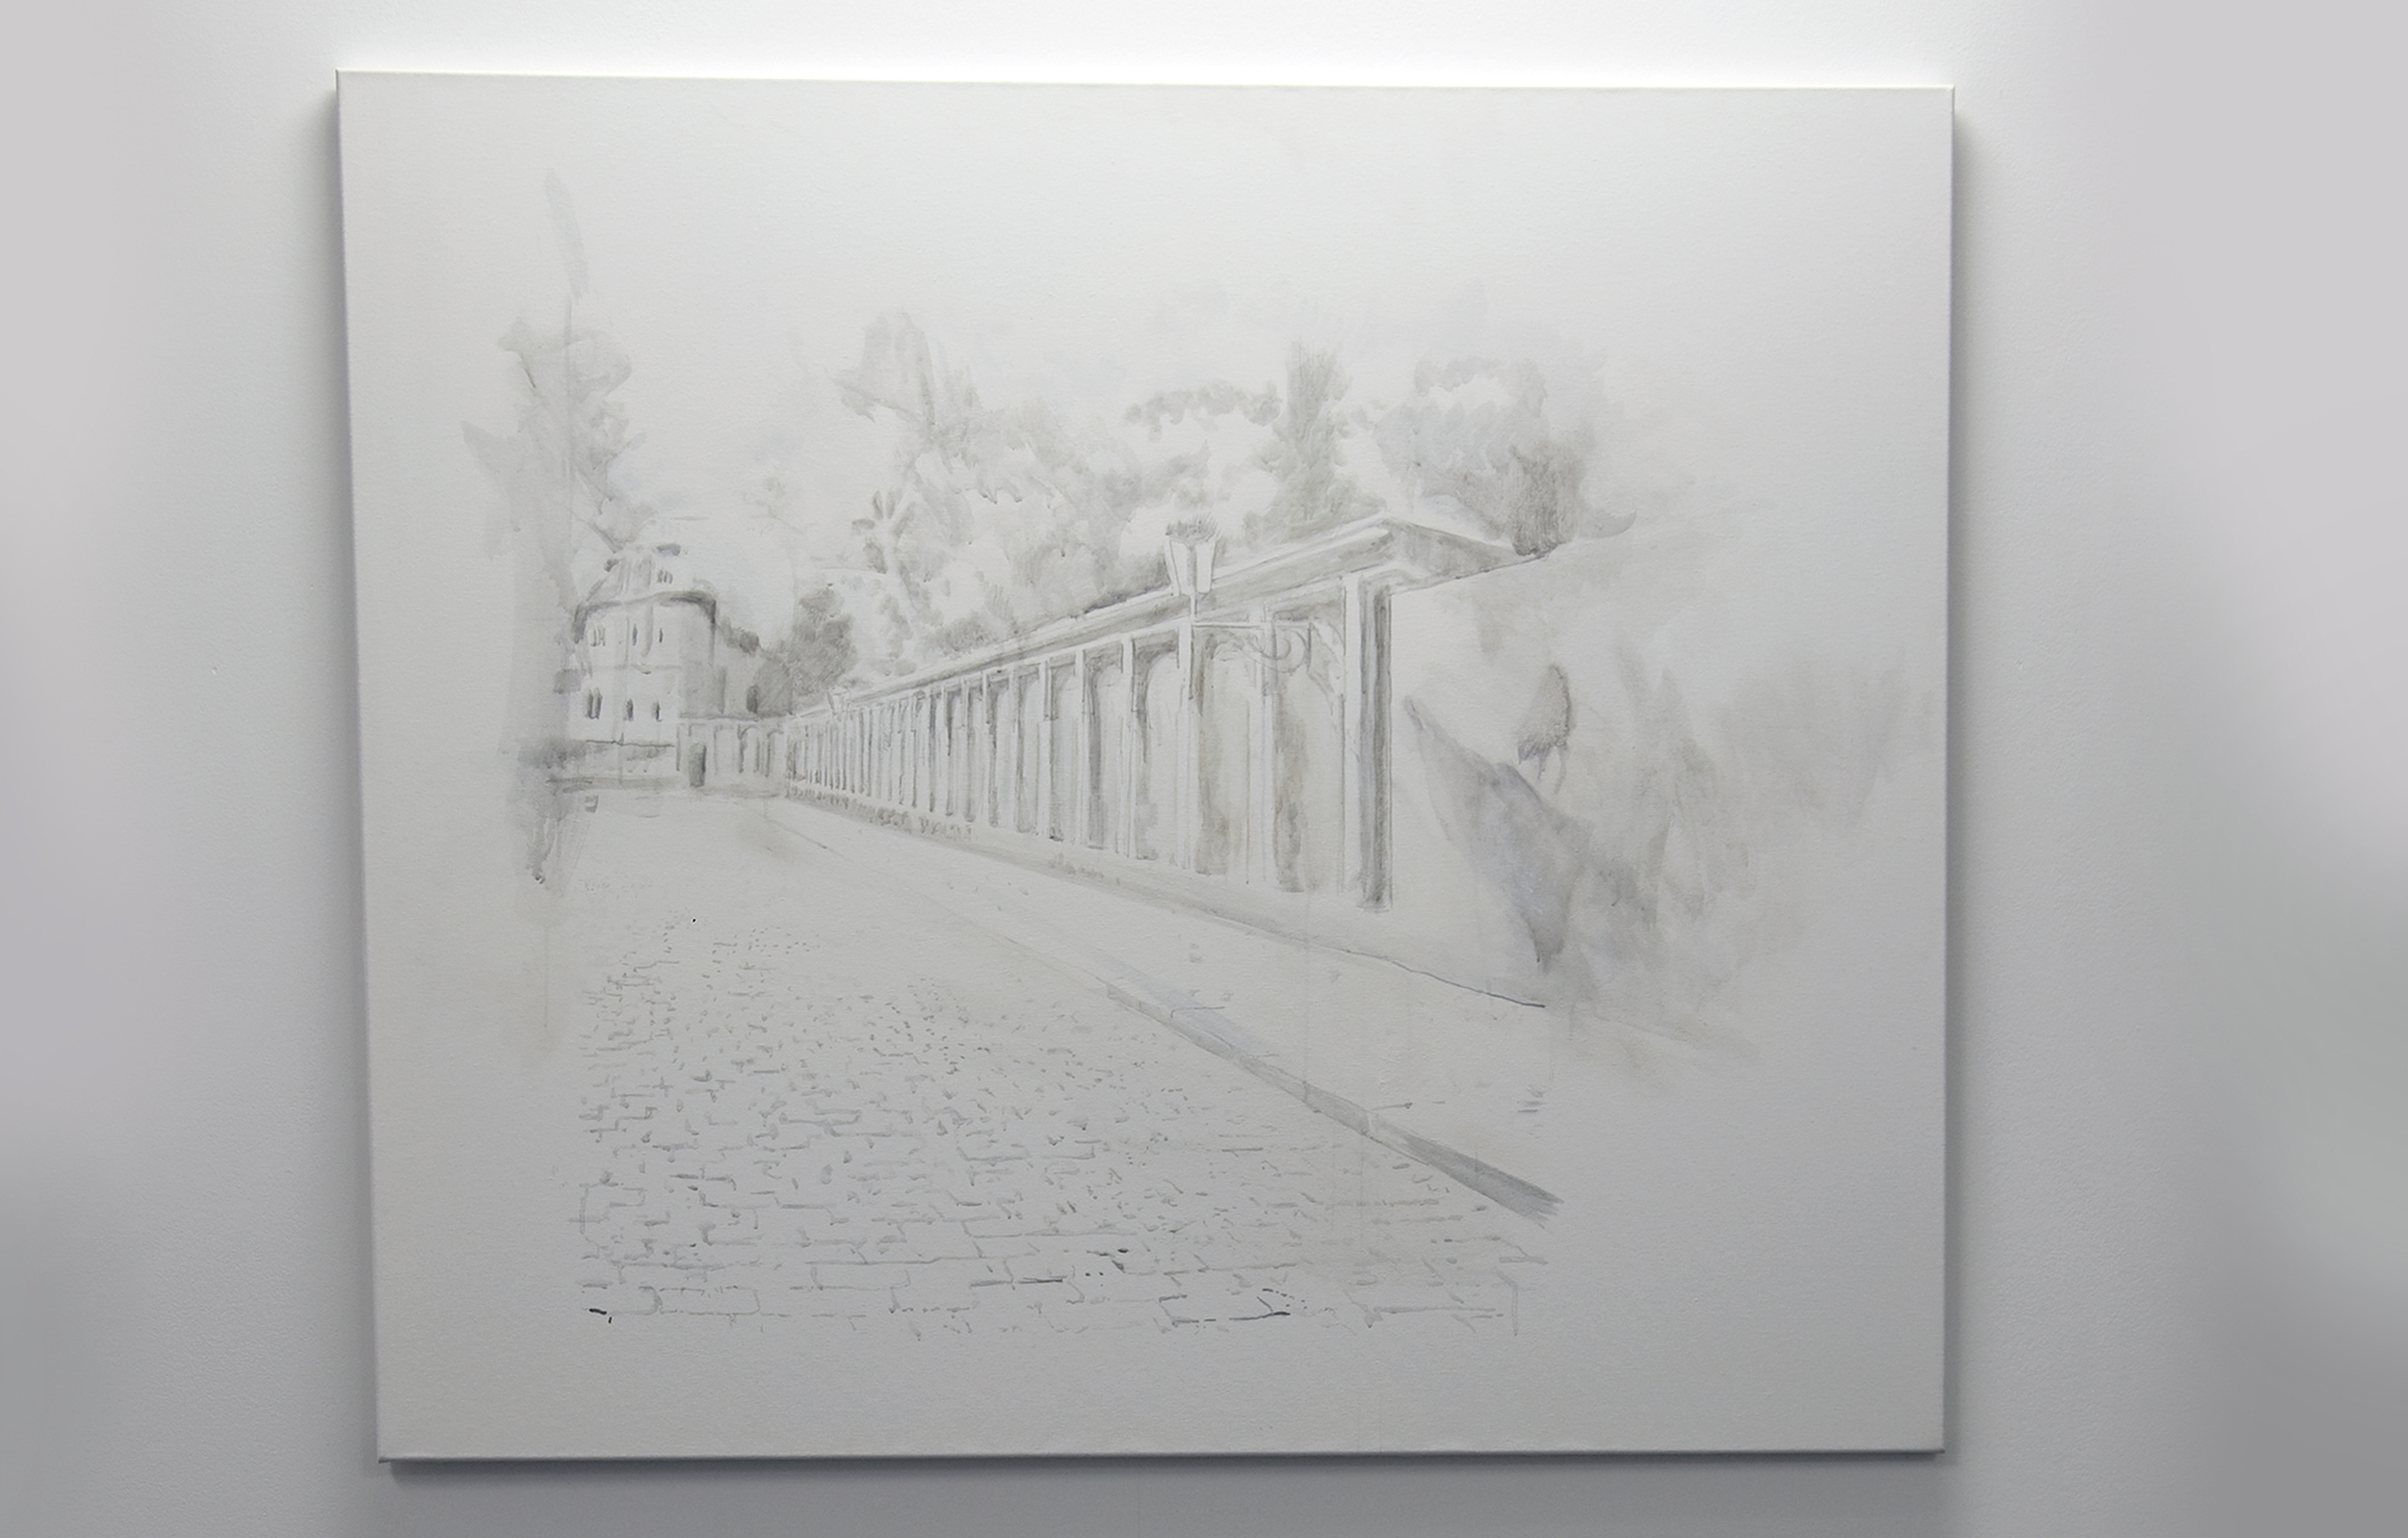   The Wall of Josefov , 2014 Acrylic on canvas, 120 x 140 cm    